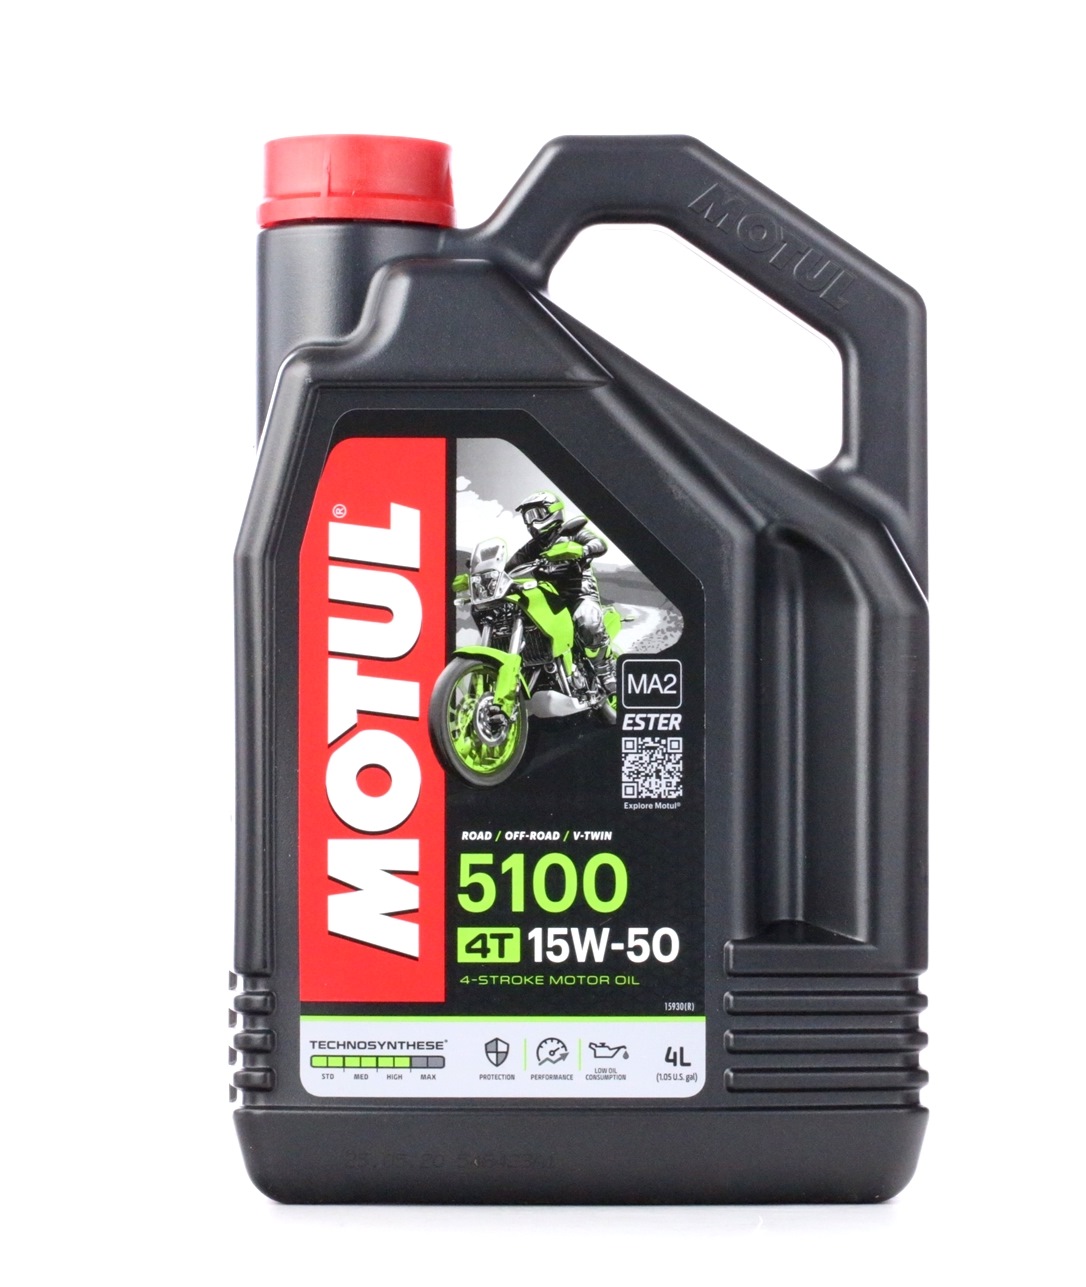 Motoröl API SG 15W-50 Benzin - MOTUL 104083 4T